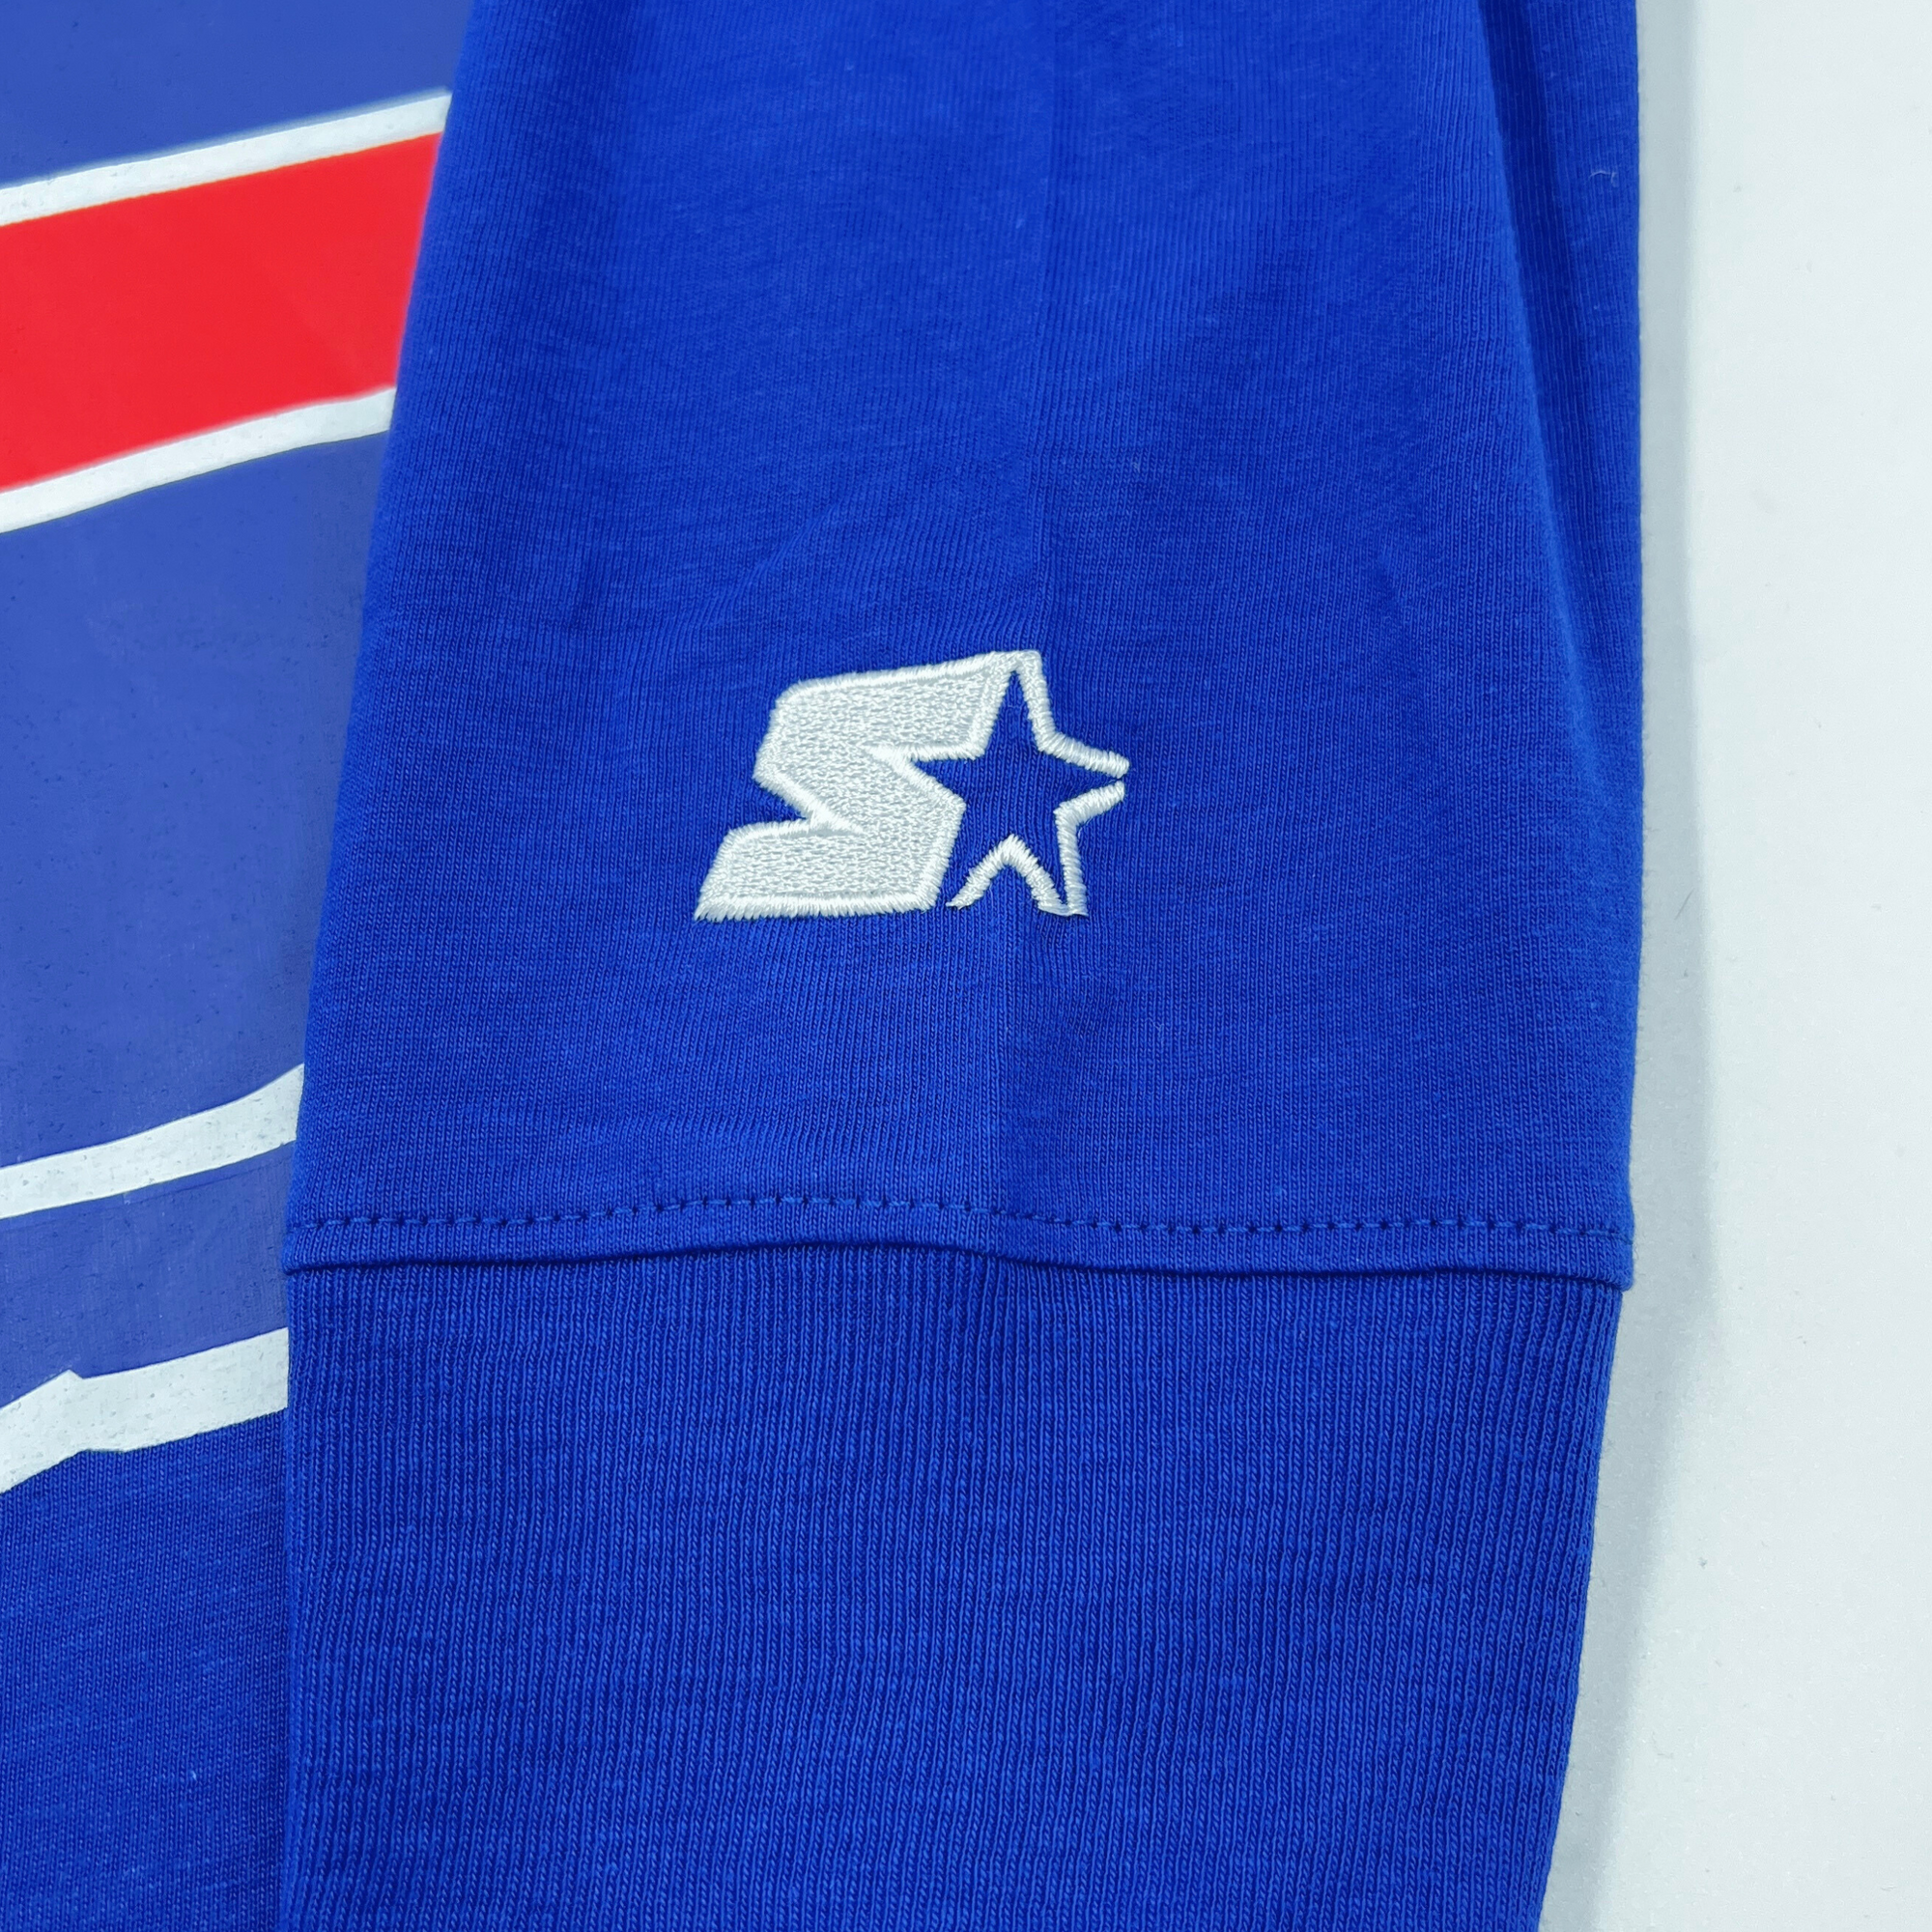 Buffalo Bills Royal Blue Starter Graphic Long Sleeve Shirt